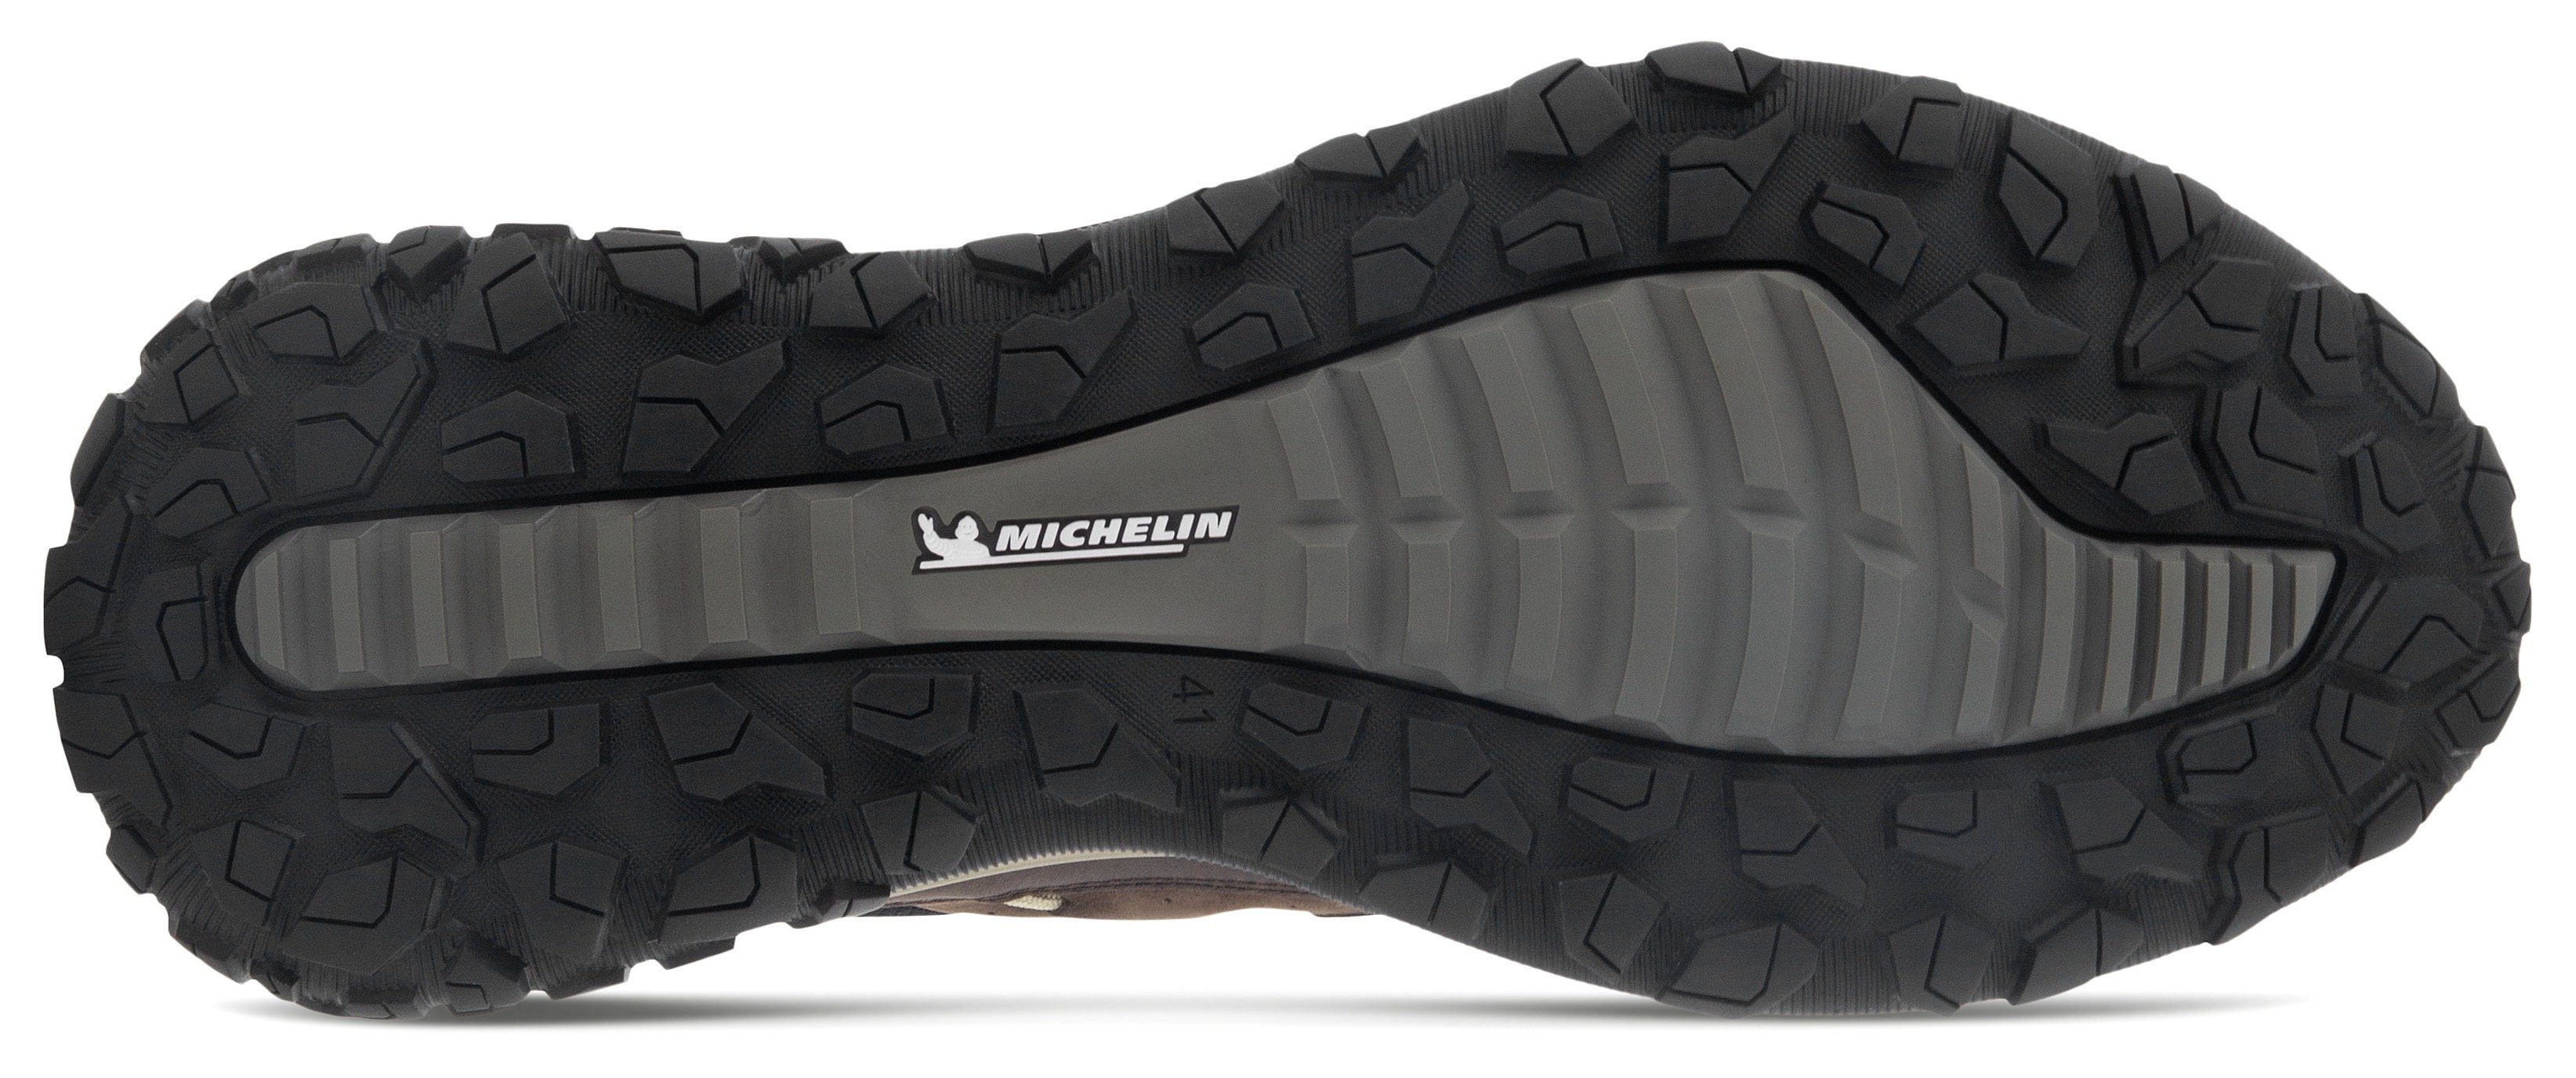 Michelin-Laufsohle profilierter ULT-TRN Ecco Sneaker M dunkelbraun mit